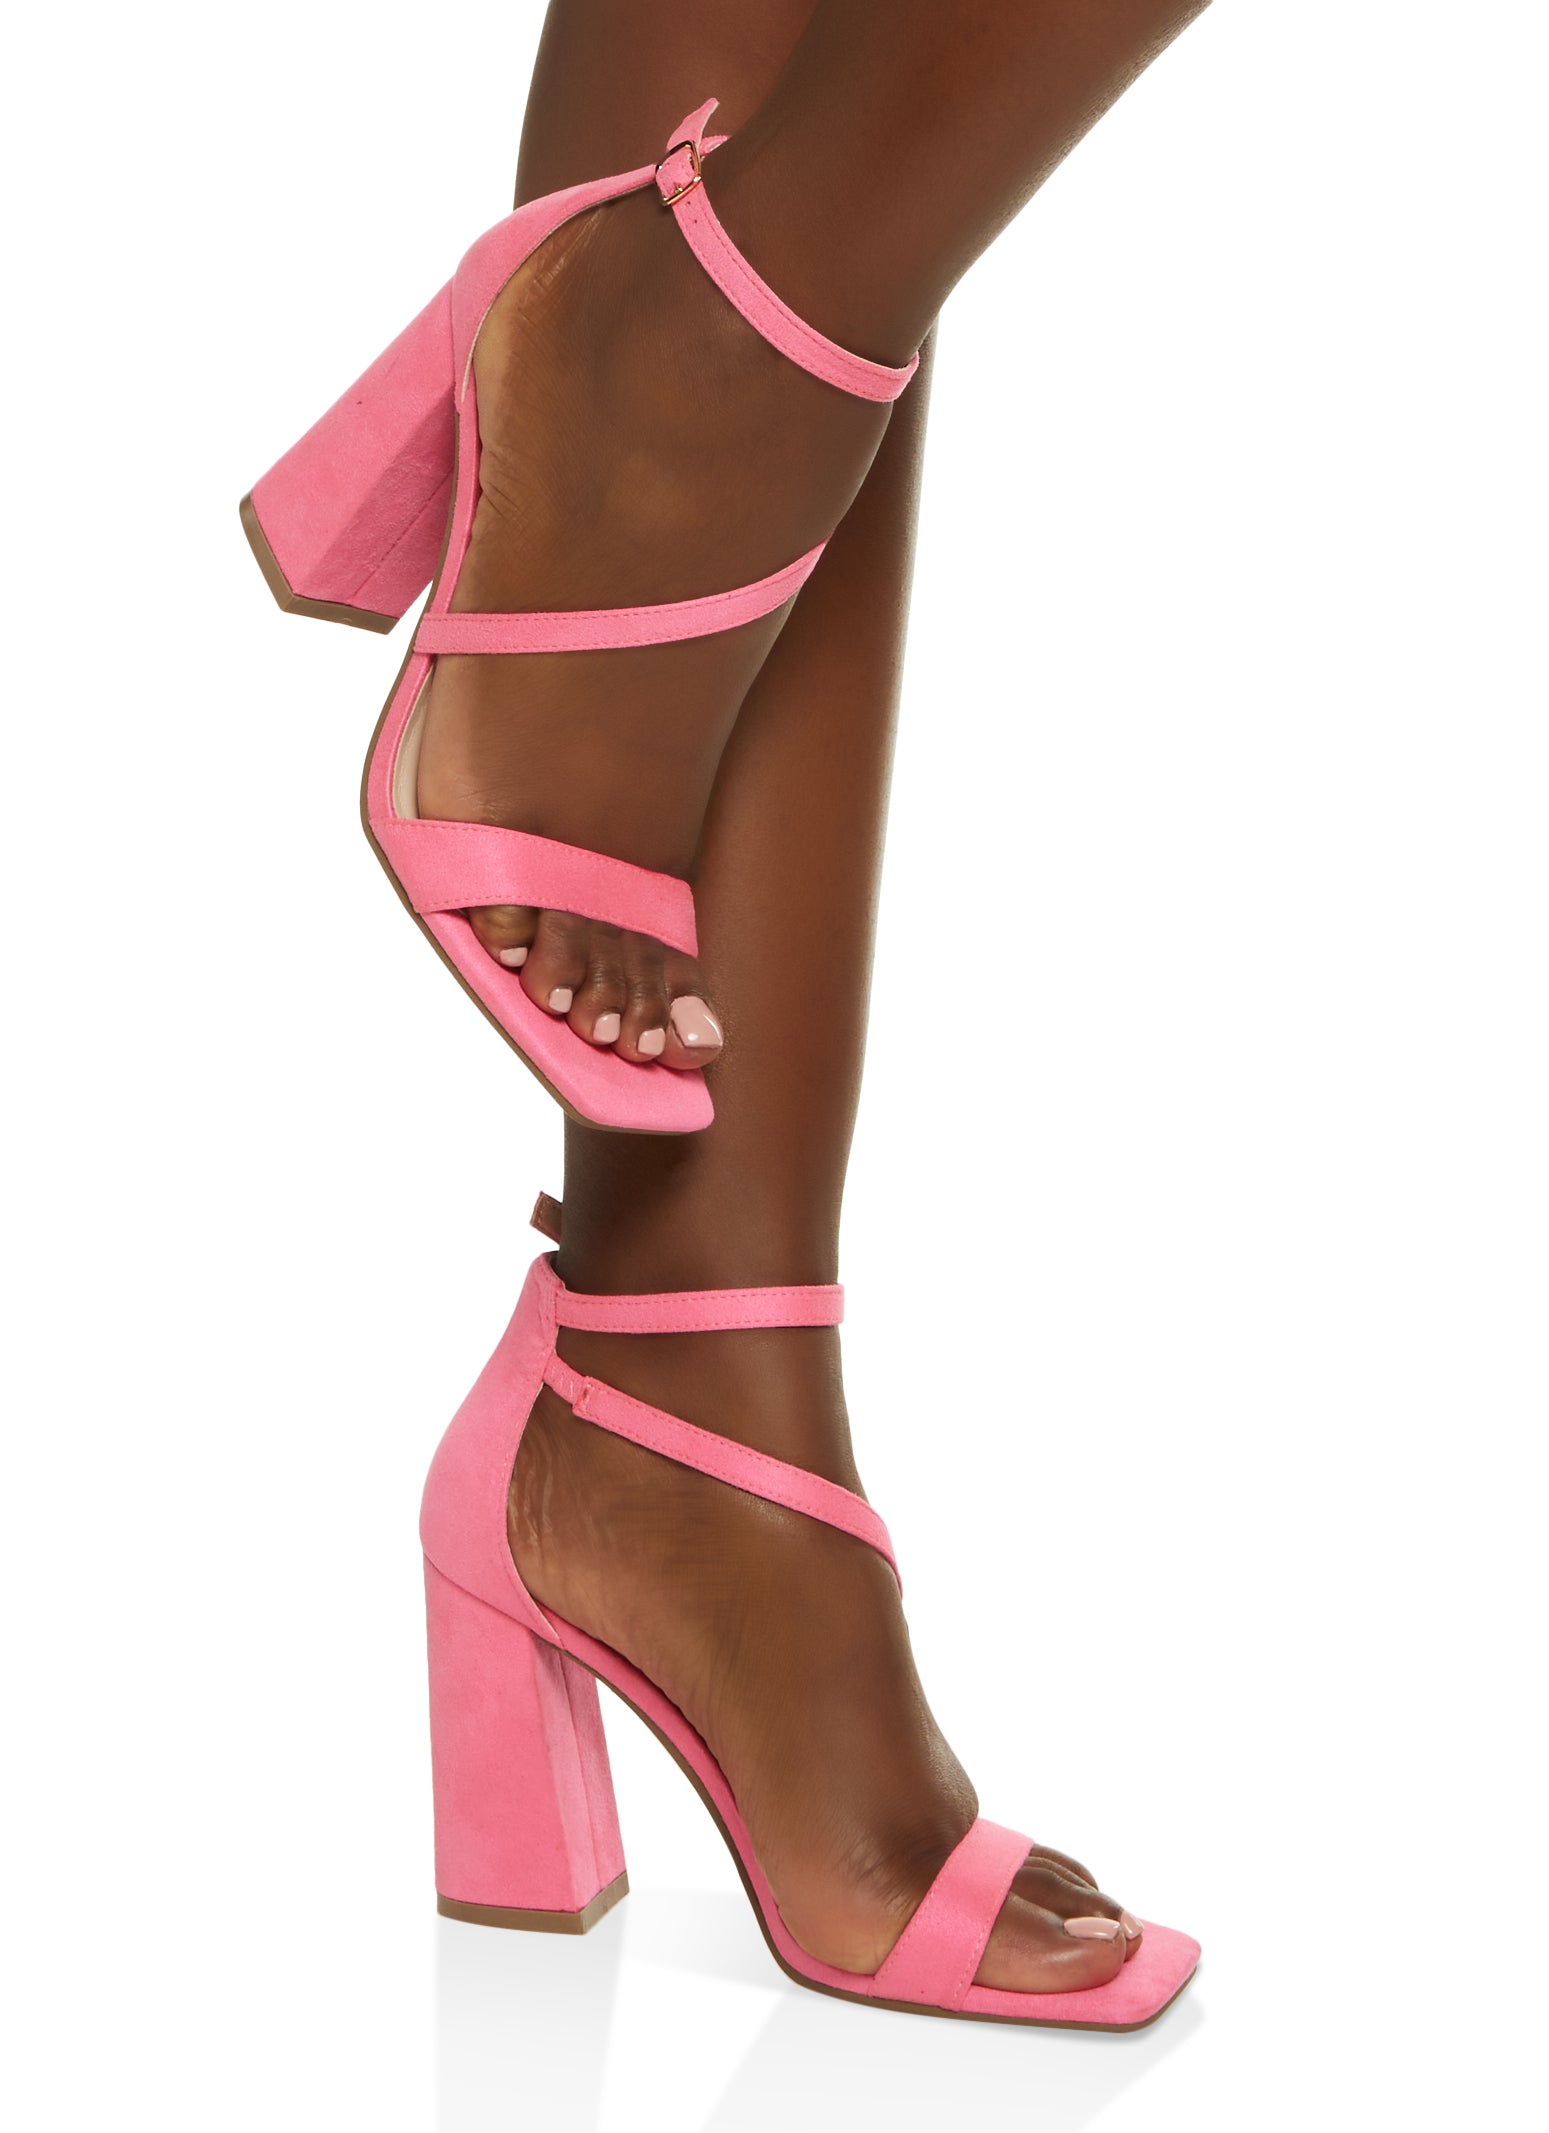 N by Nicole Miller Multicolor Strappy Sandals Block Heels Womens Size 7.5 |  eBay